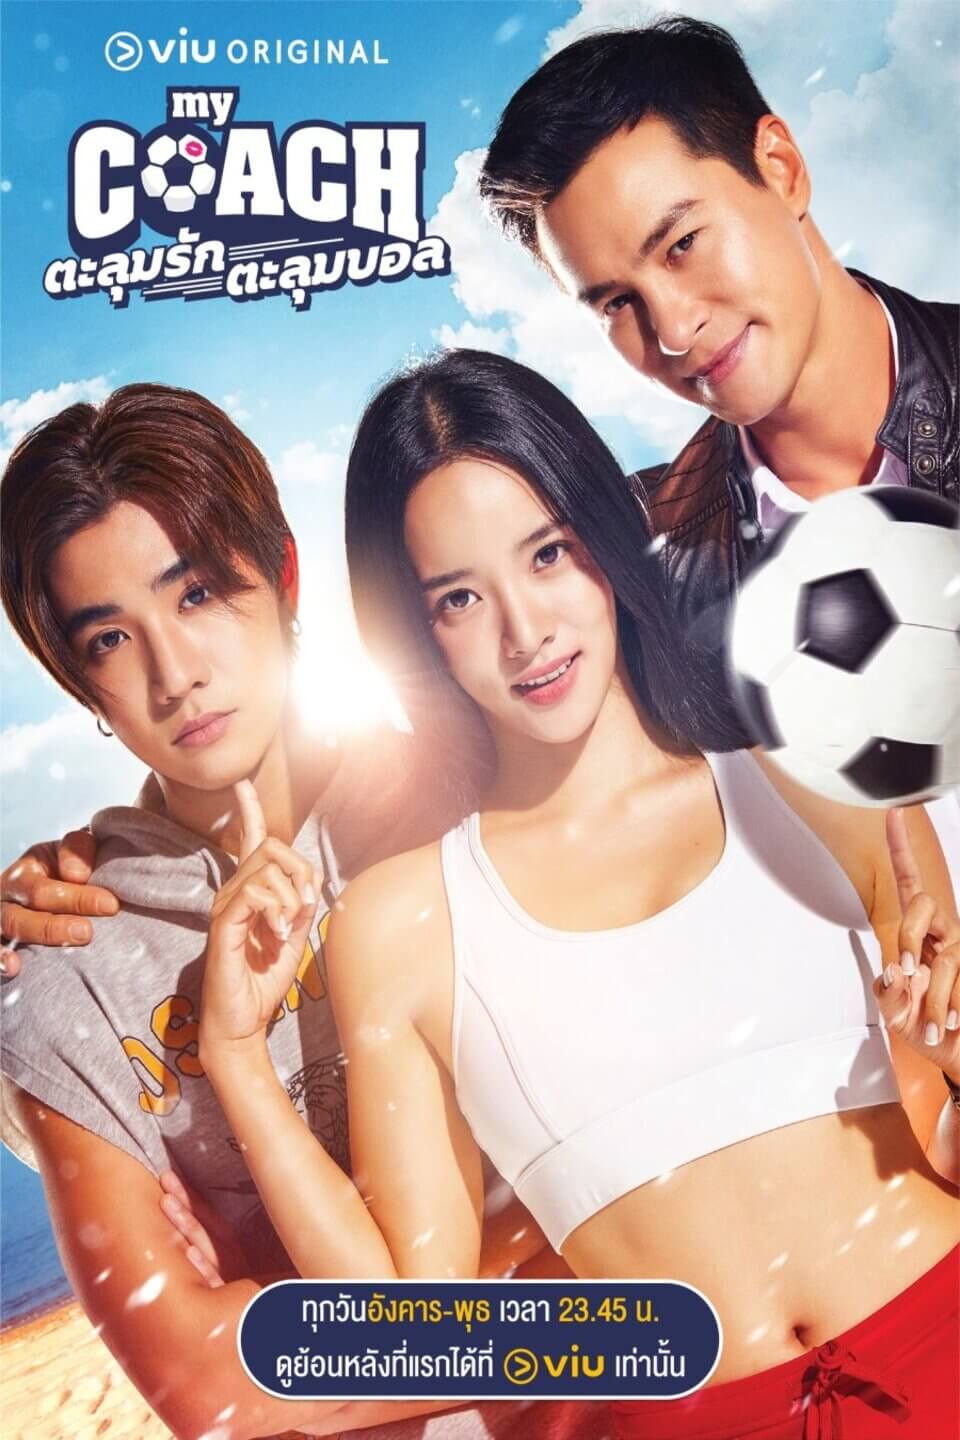 TV ratings for My Coach (ตะลุมรัก ตะลุมบอล) in Tailandia. ViuTV TV series